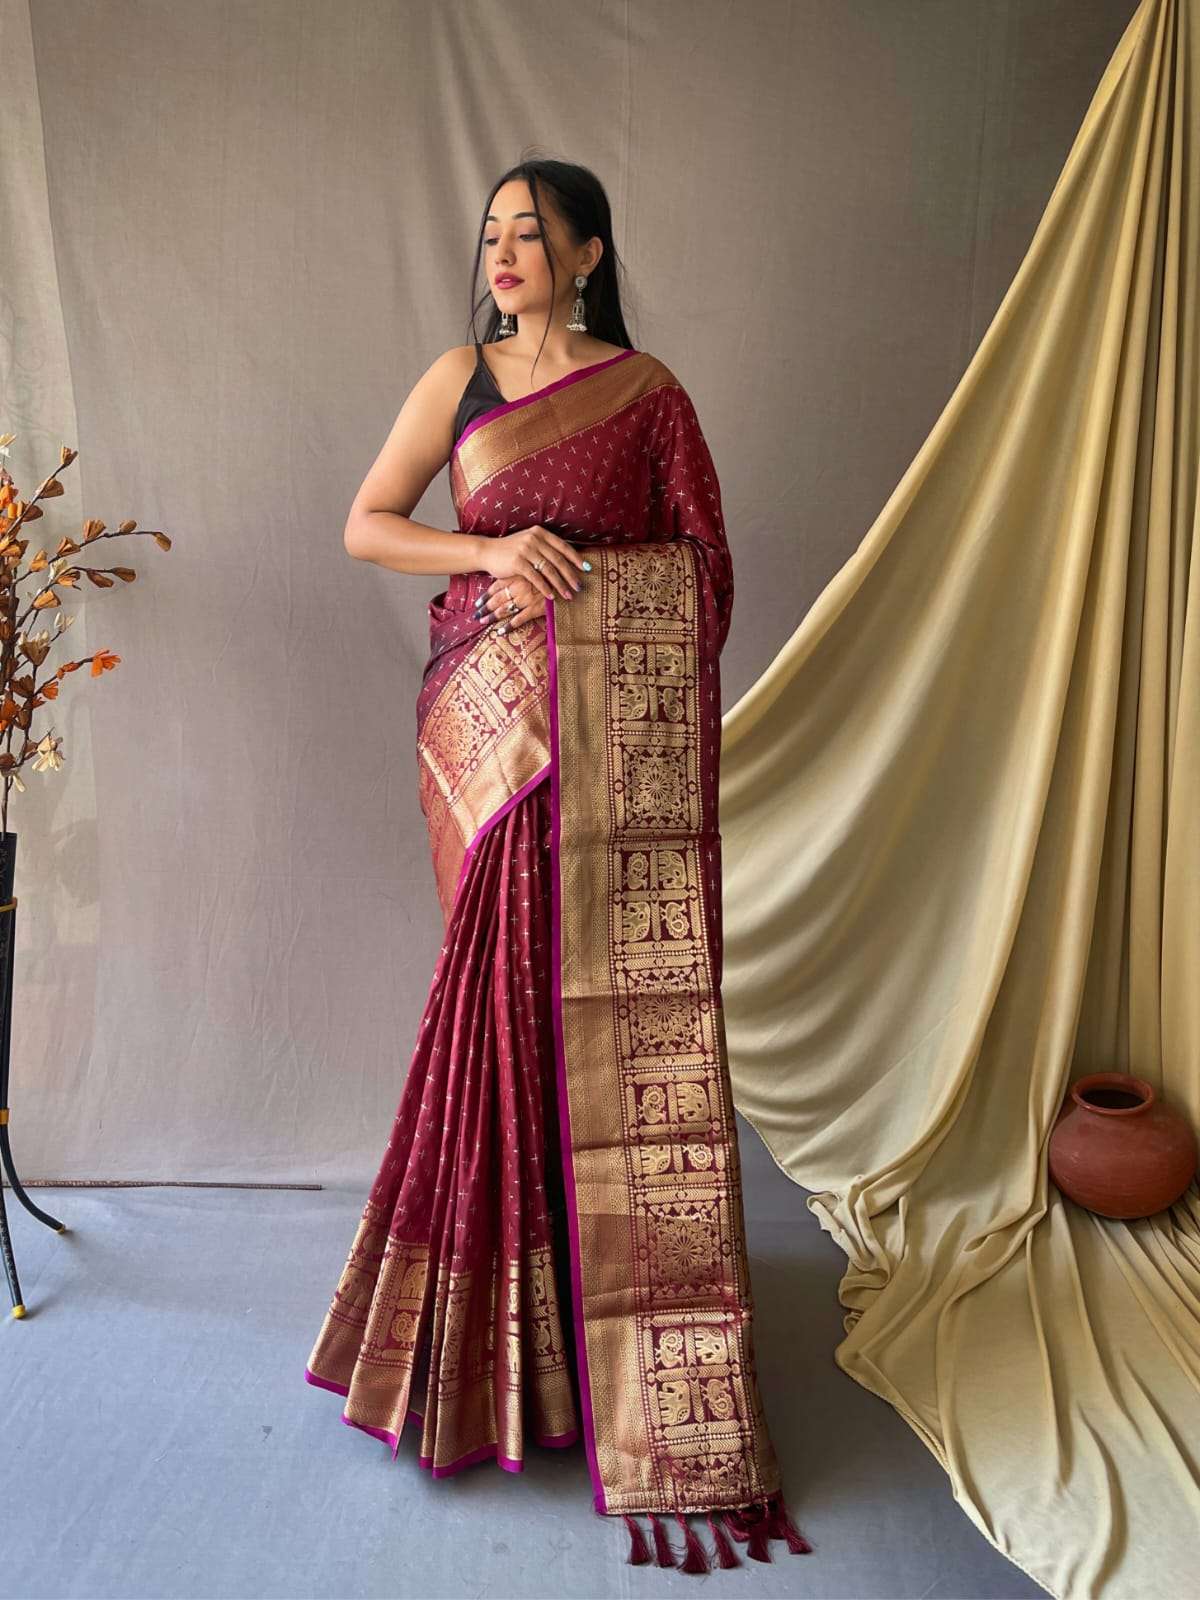 Discover 226+ new saree design latest